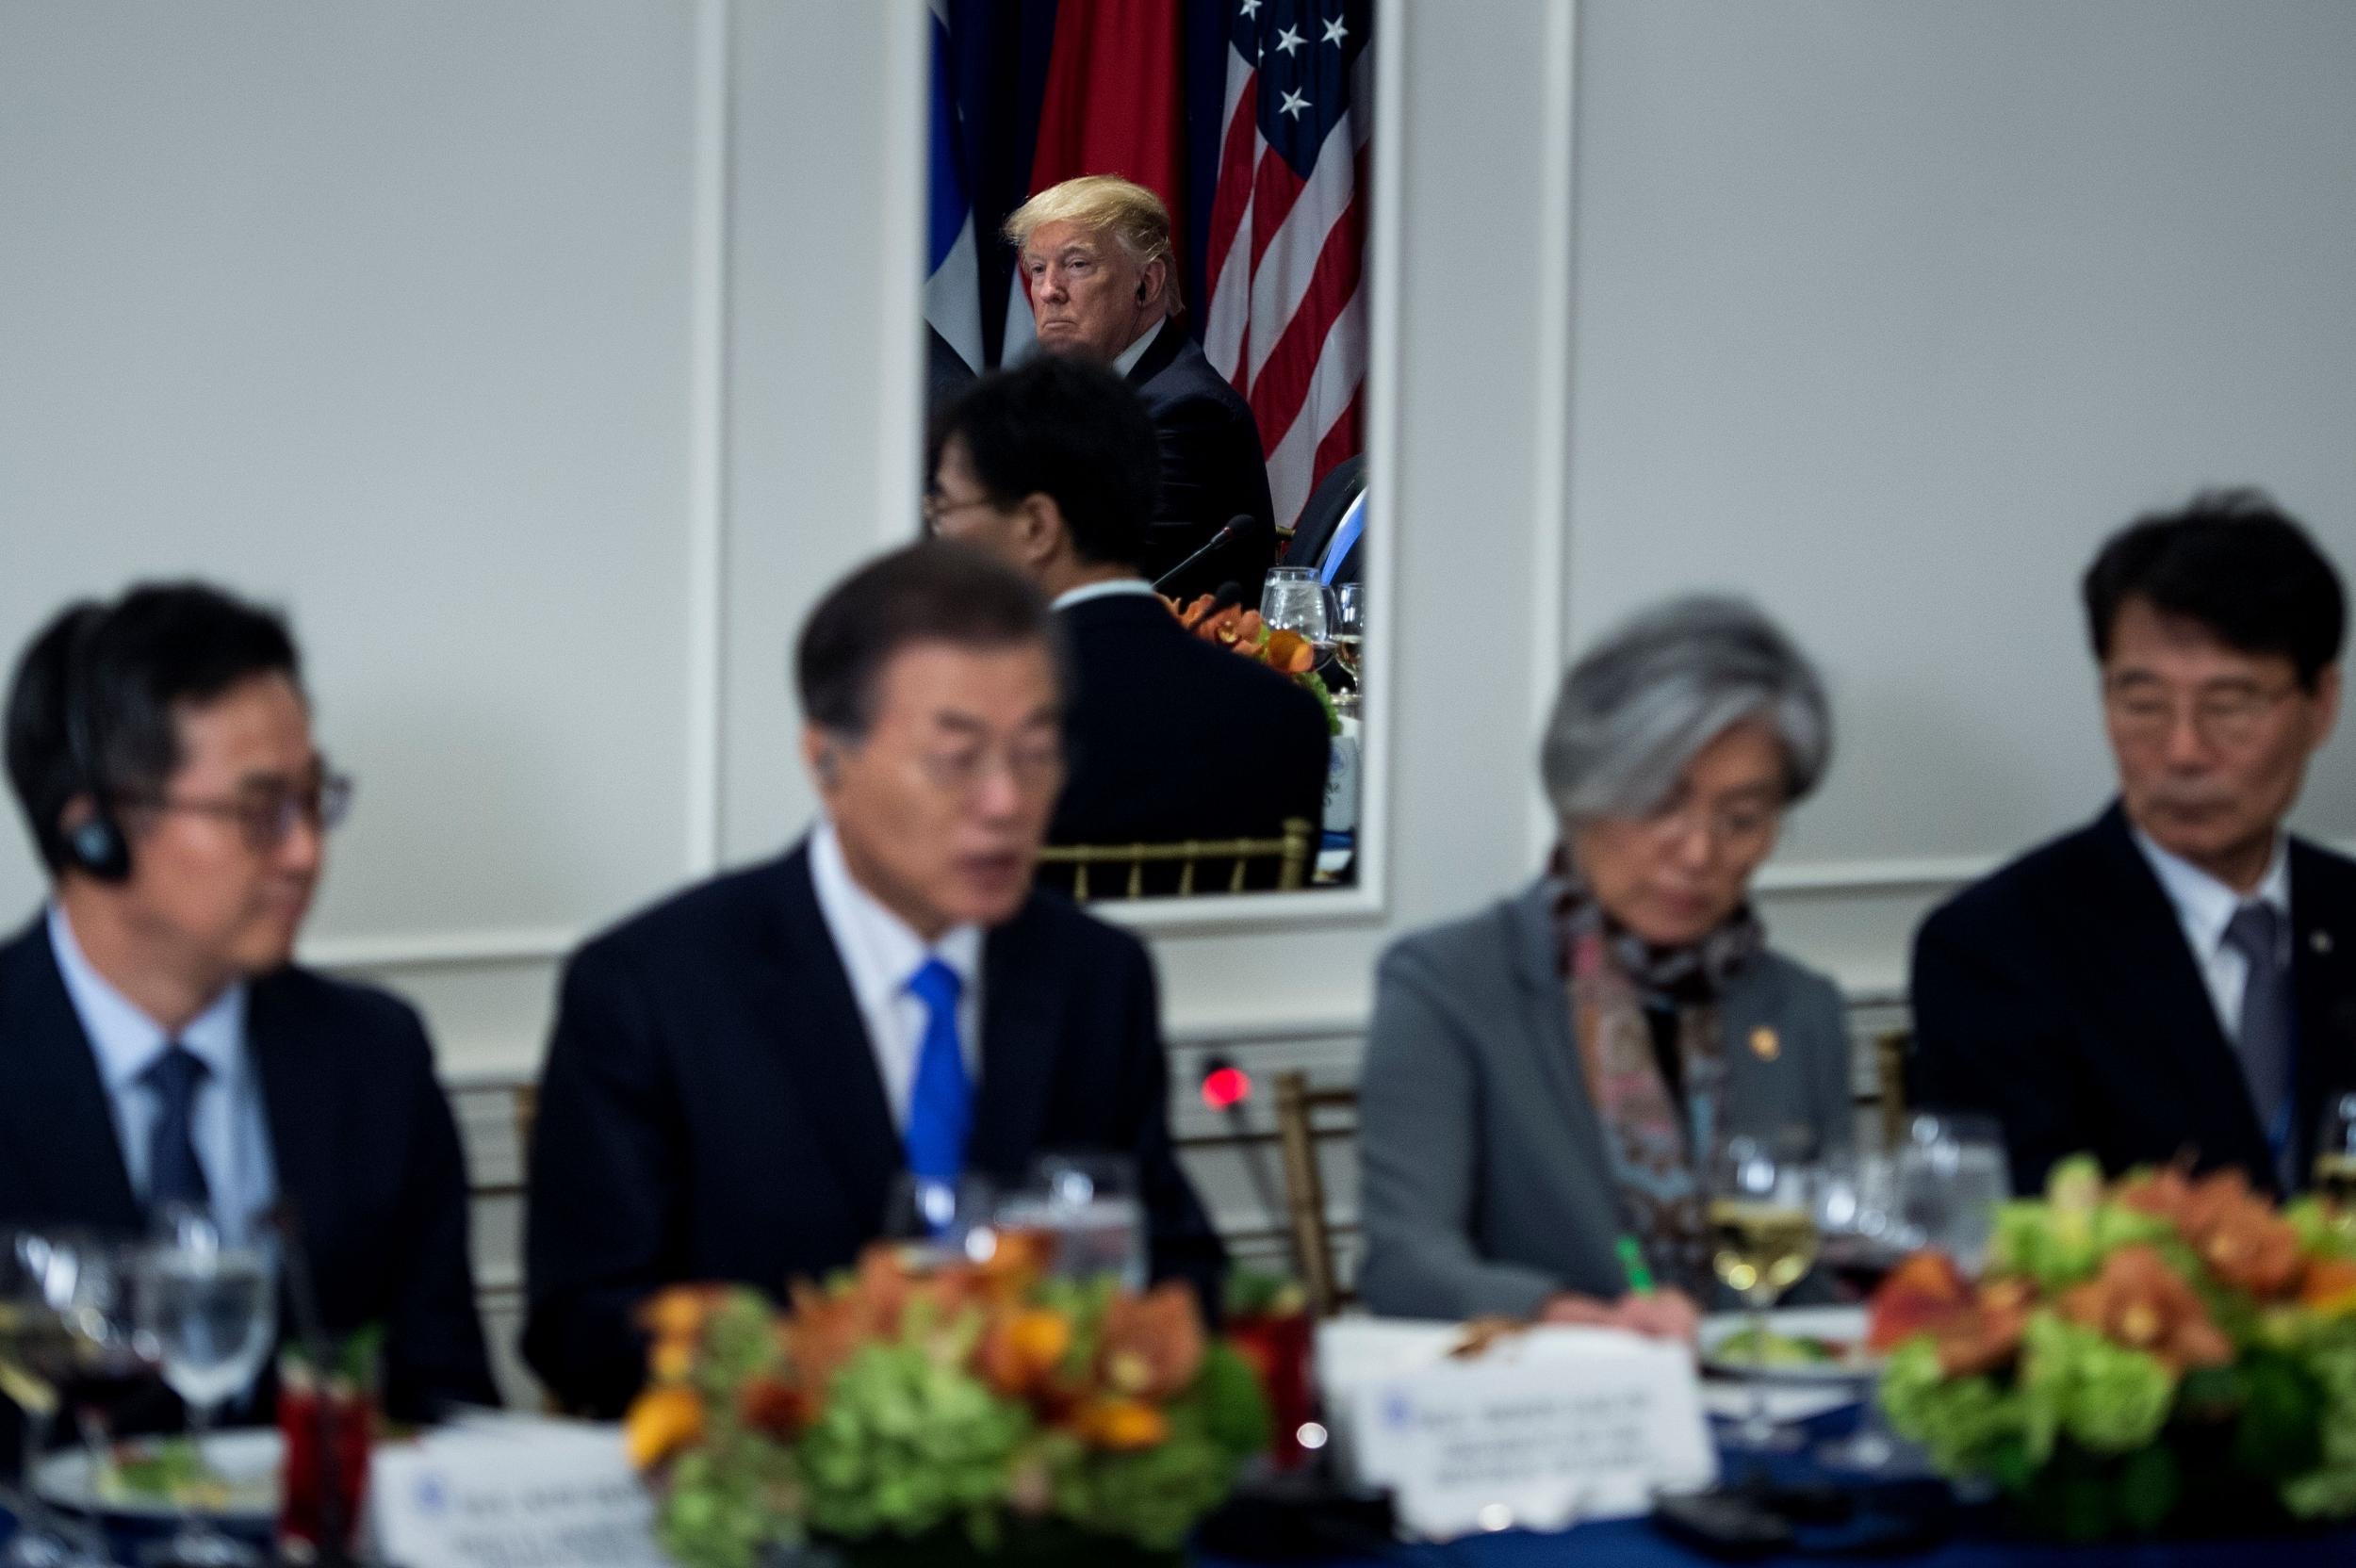 Mr Trump is seen in a mirror listening while South Korea's President Moon Jae-in speaks before luncheon between US, Korean and Japanese leaders in New York